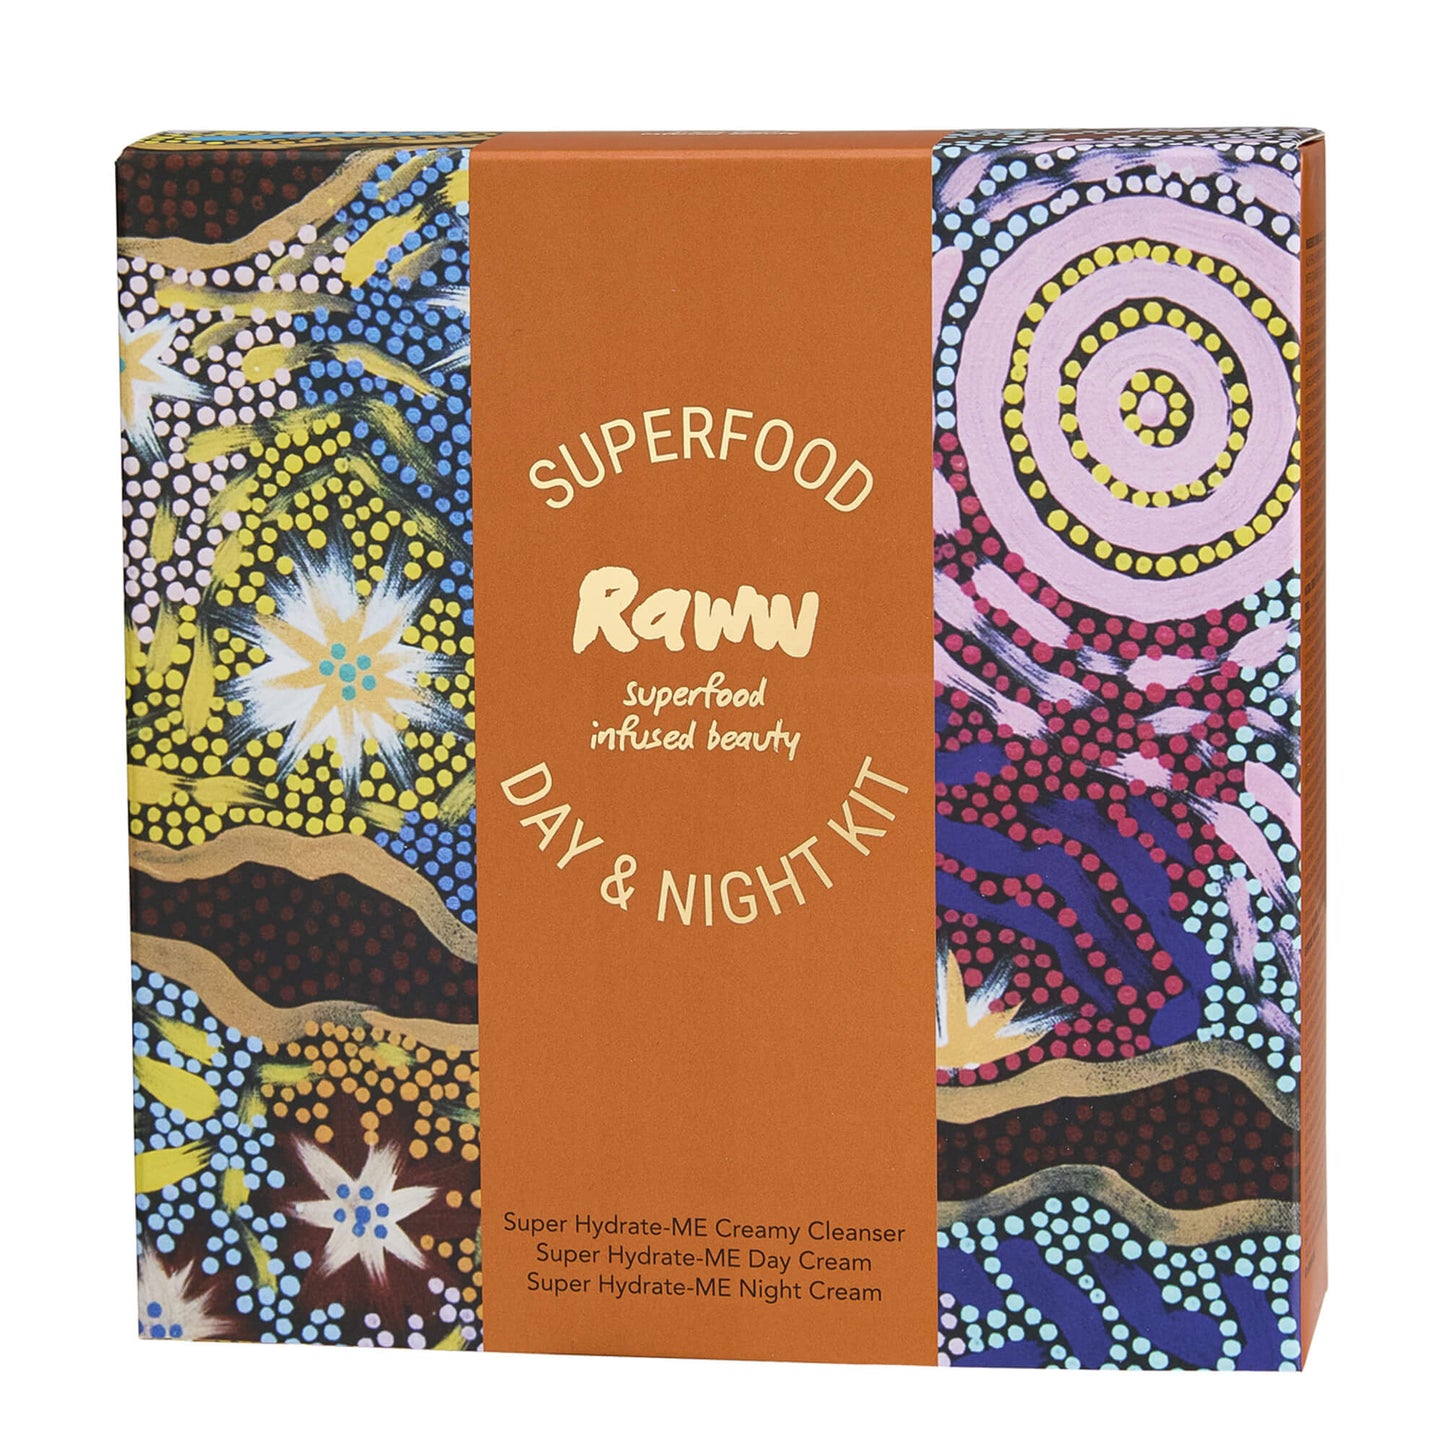 Day & Night Superfood Skincare Kit | RAWW Cosmetics | 02